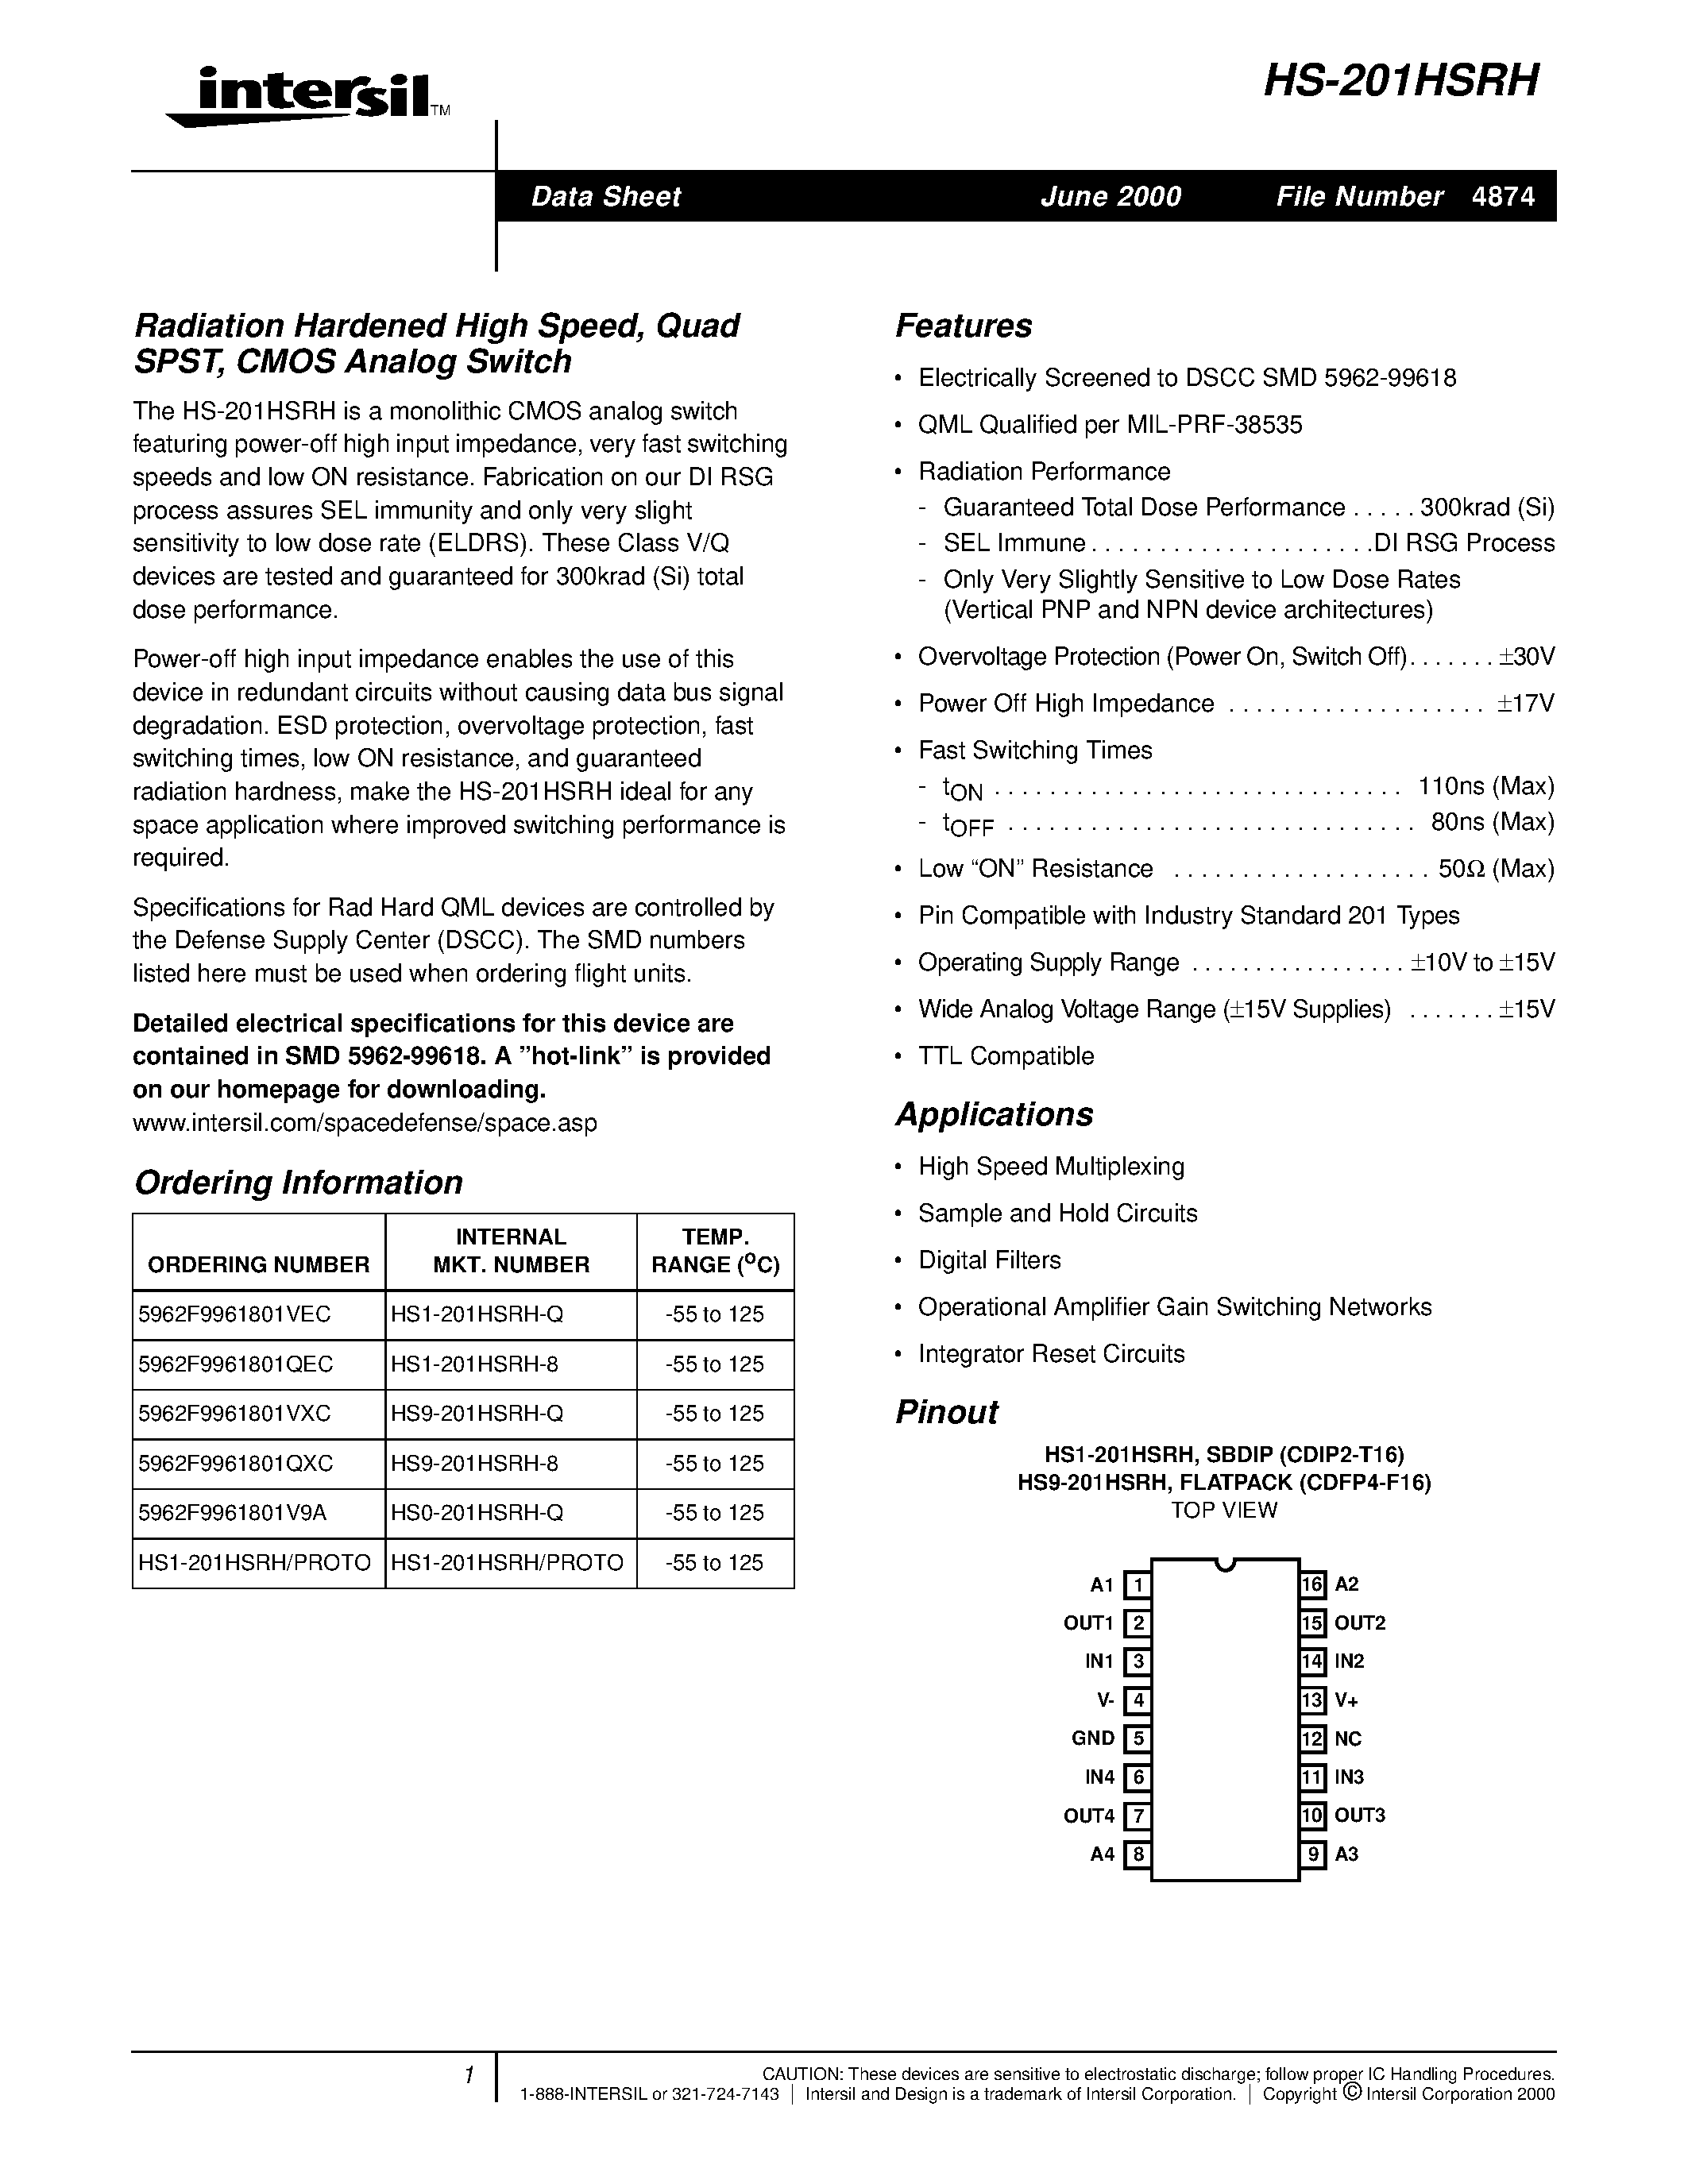 Даташит HS0-201HSRH-Q - Radiation Hardened High Speed/ Quad SPST/ CMOS Analog Switch страница 1